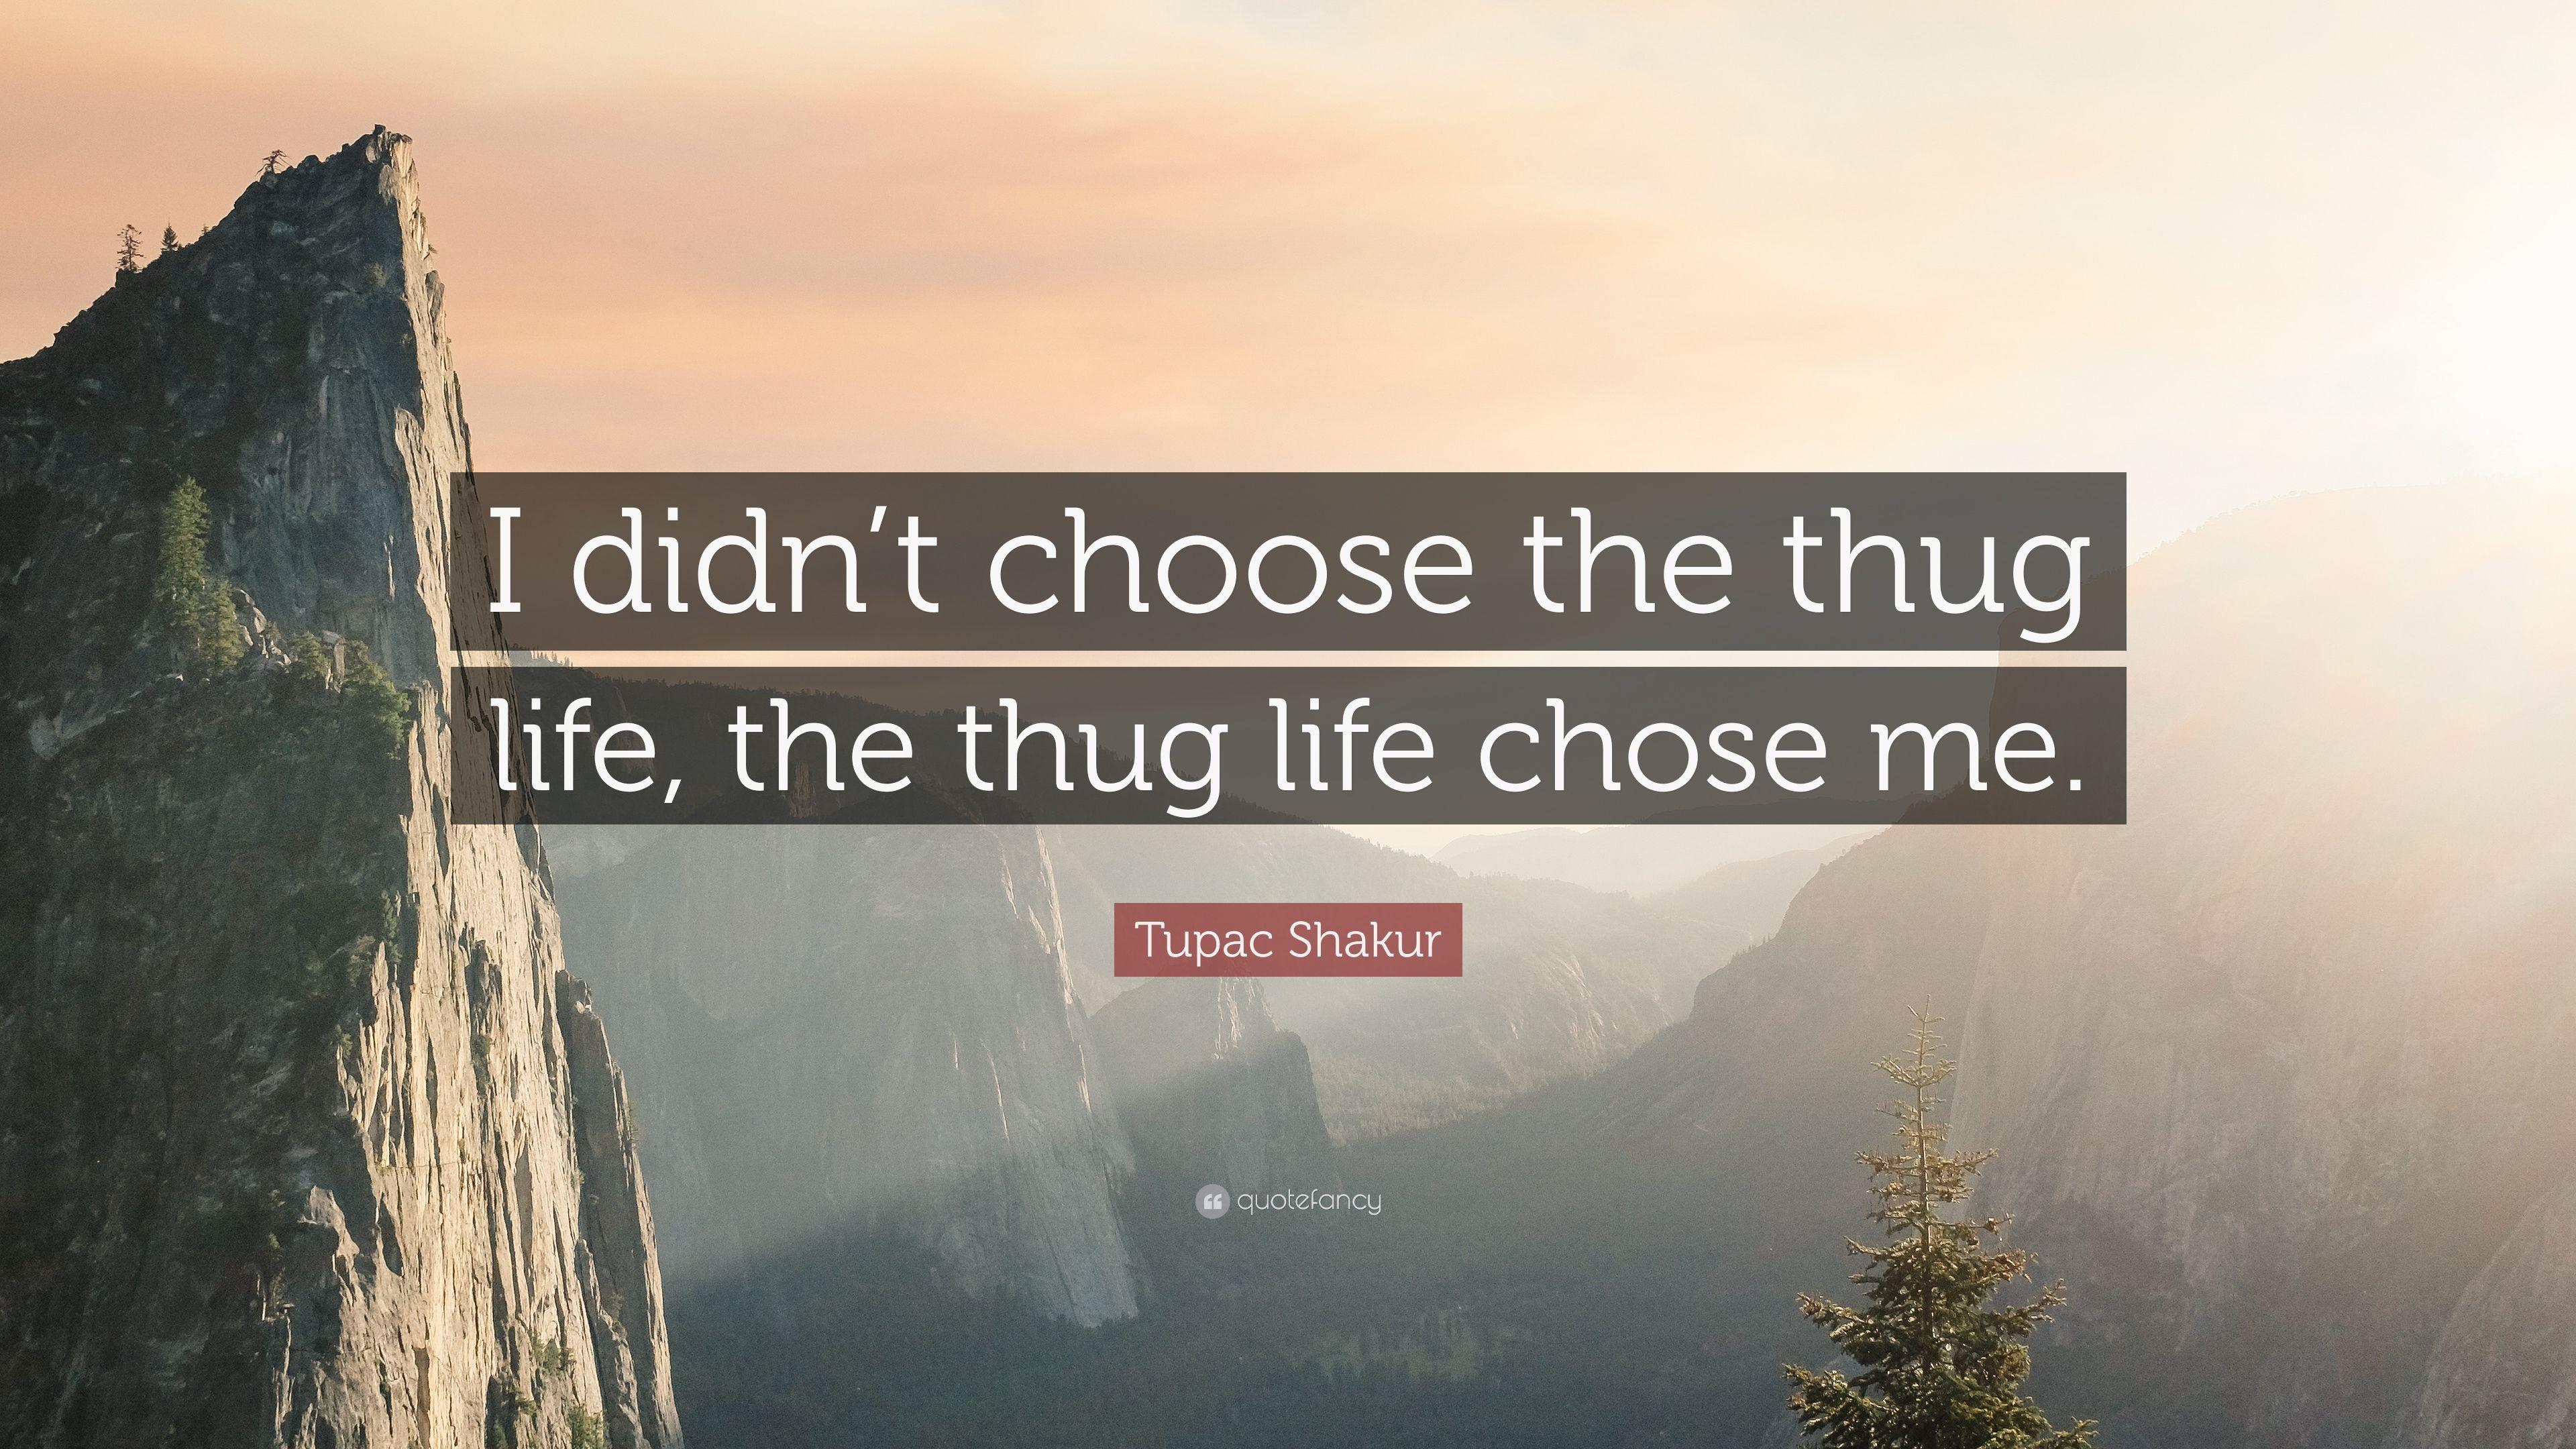 Tupac Shakur Quote: “I didn't choose the thug life, the thug life